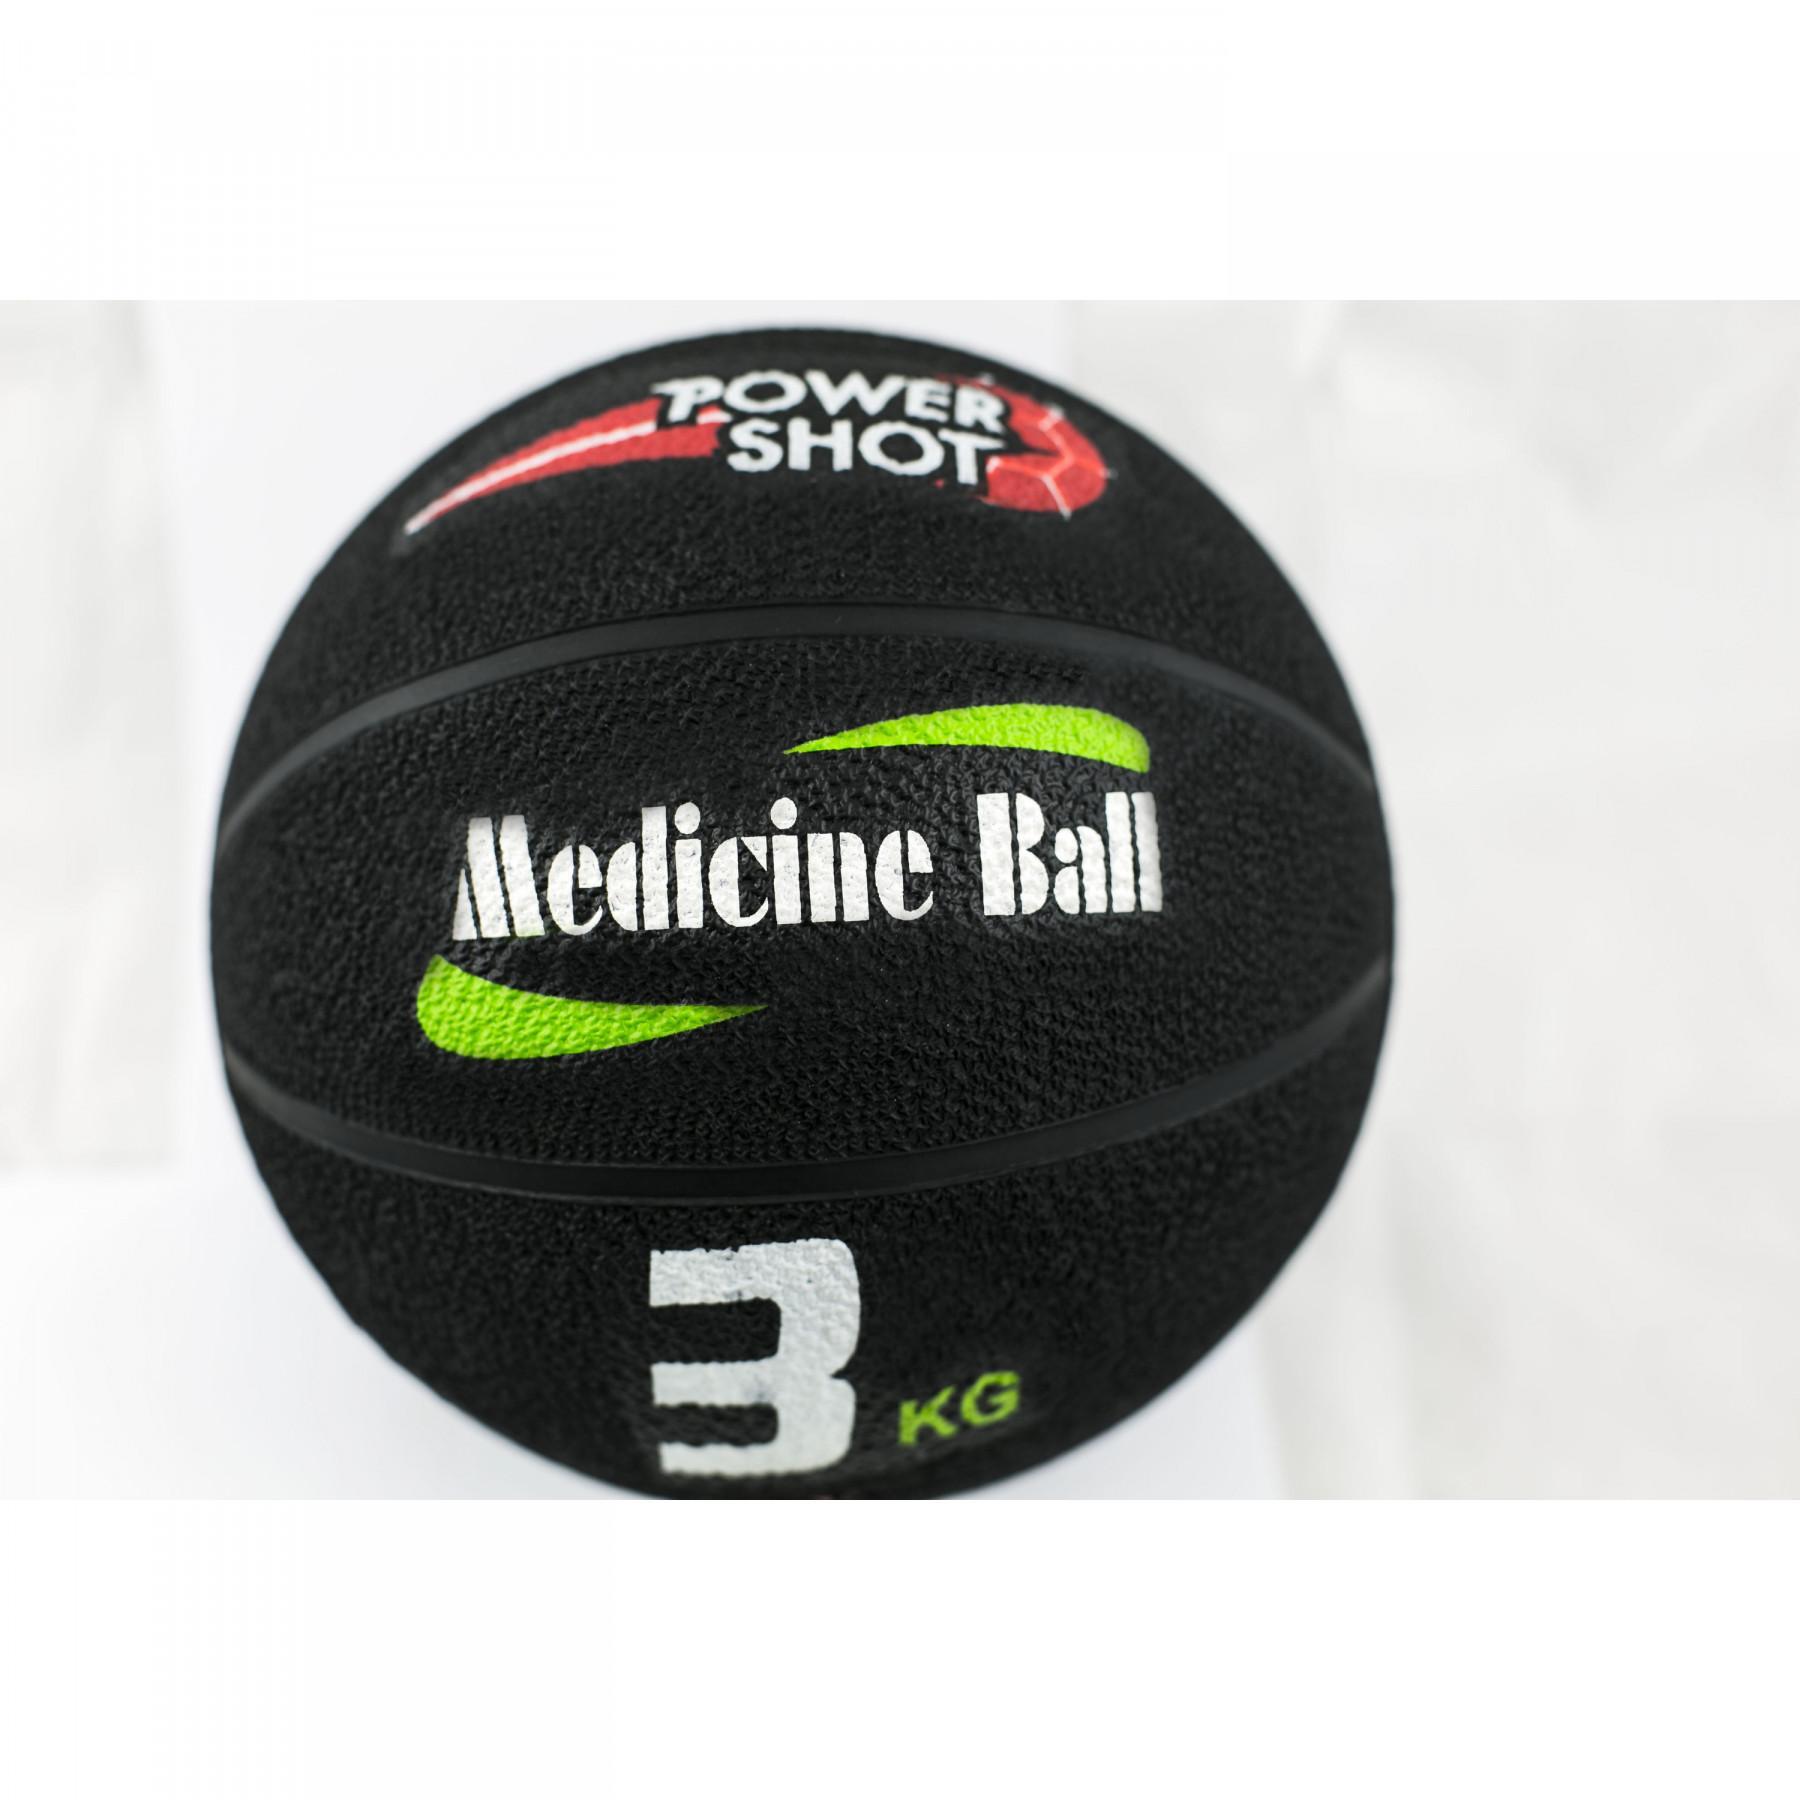 Medecine ball - 1kg PowerShot